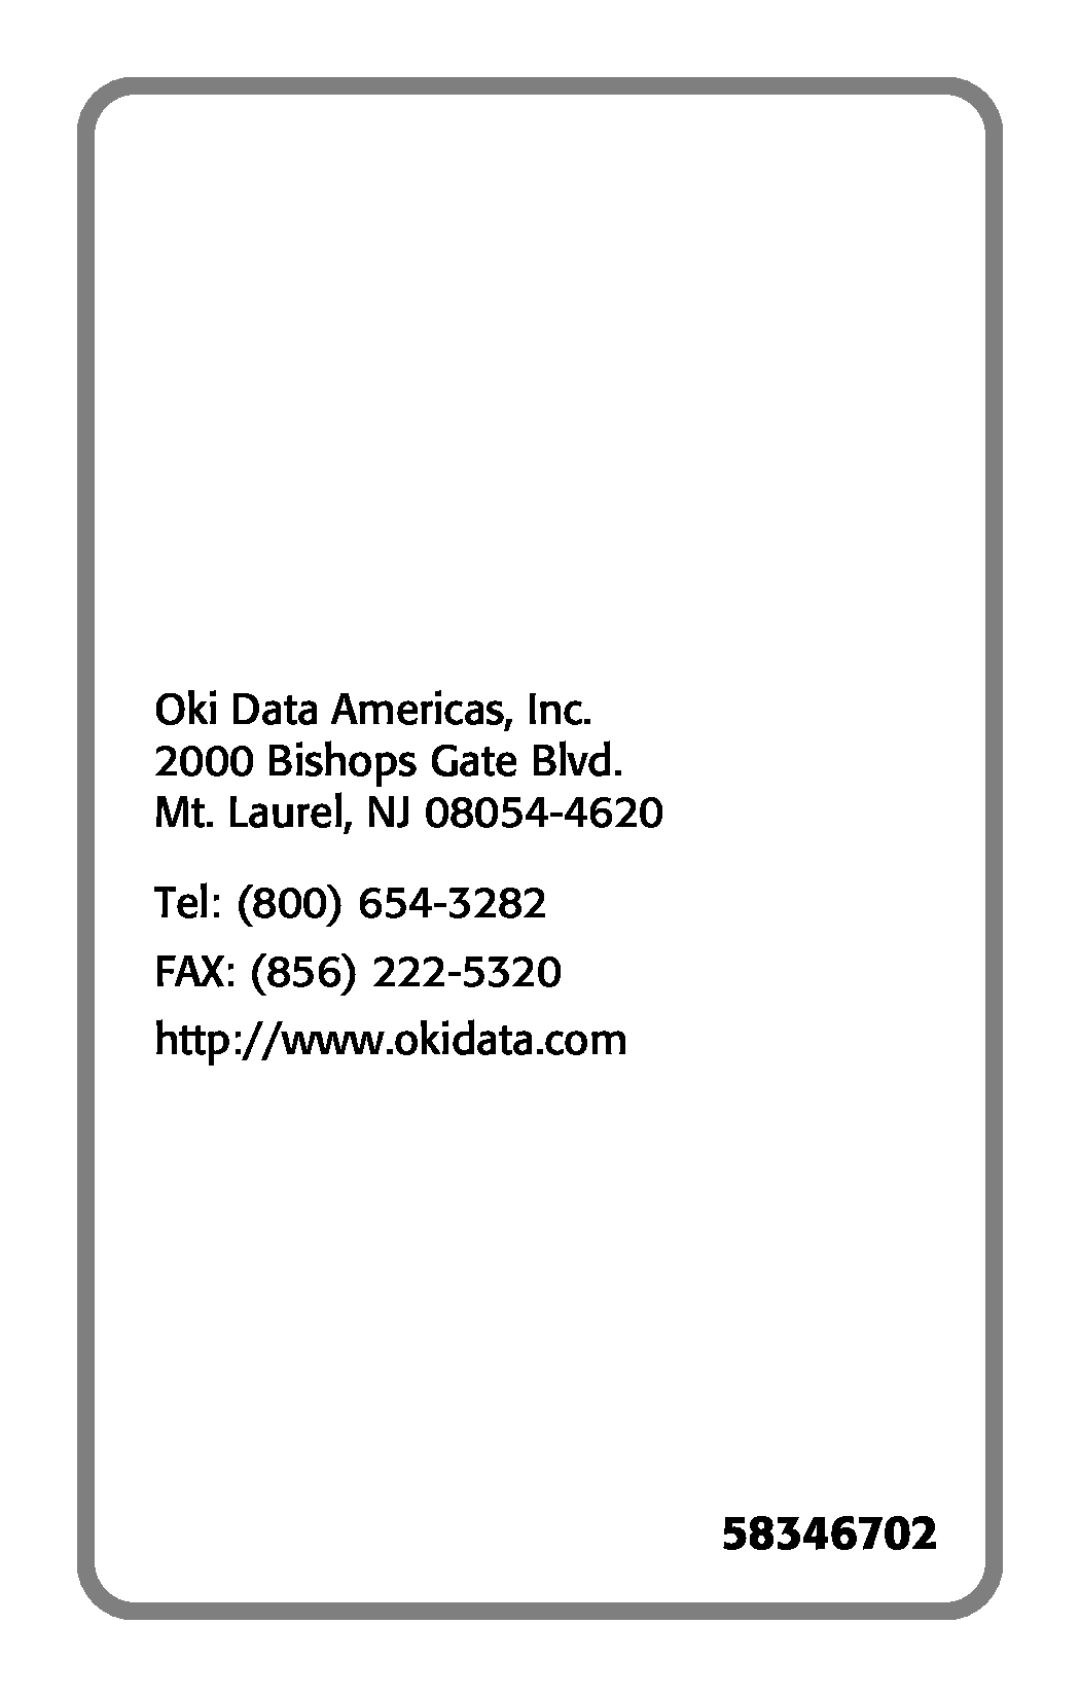 Oki 70037301 installation instructions 58346702, Oki Data Americas, Inc 2000 Bishops Gate Blvd Mt. Laurel, NJ Tel, Fax 